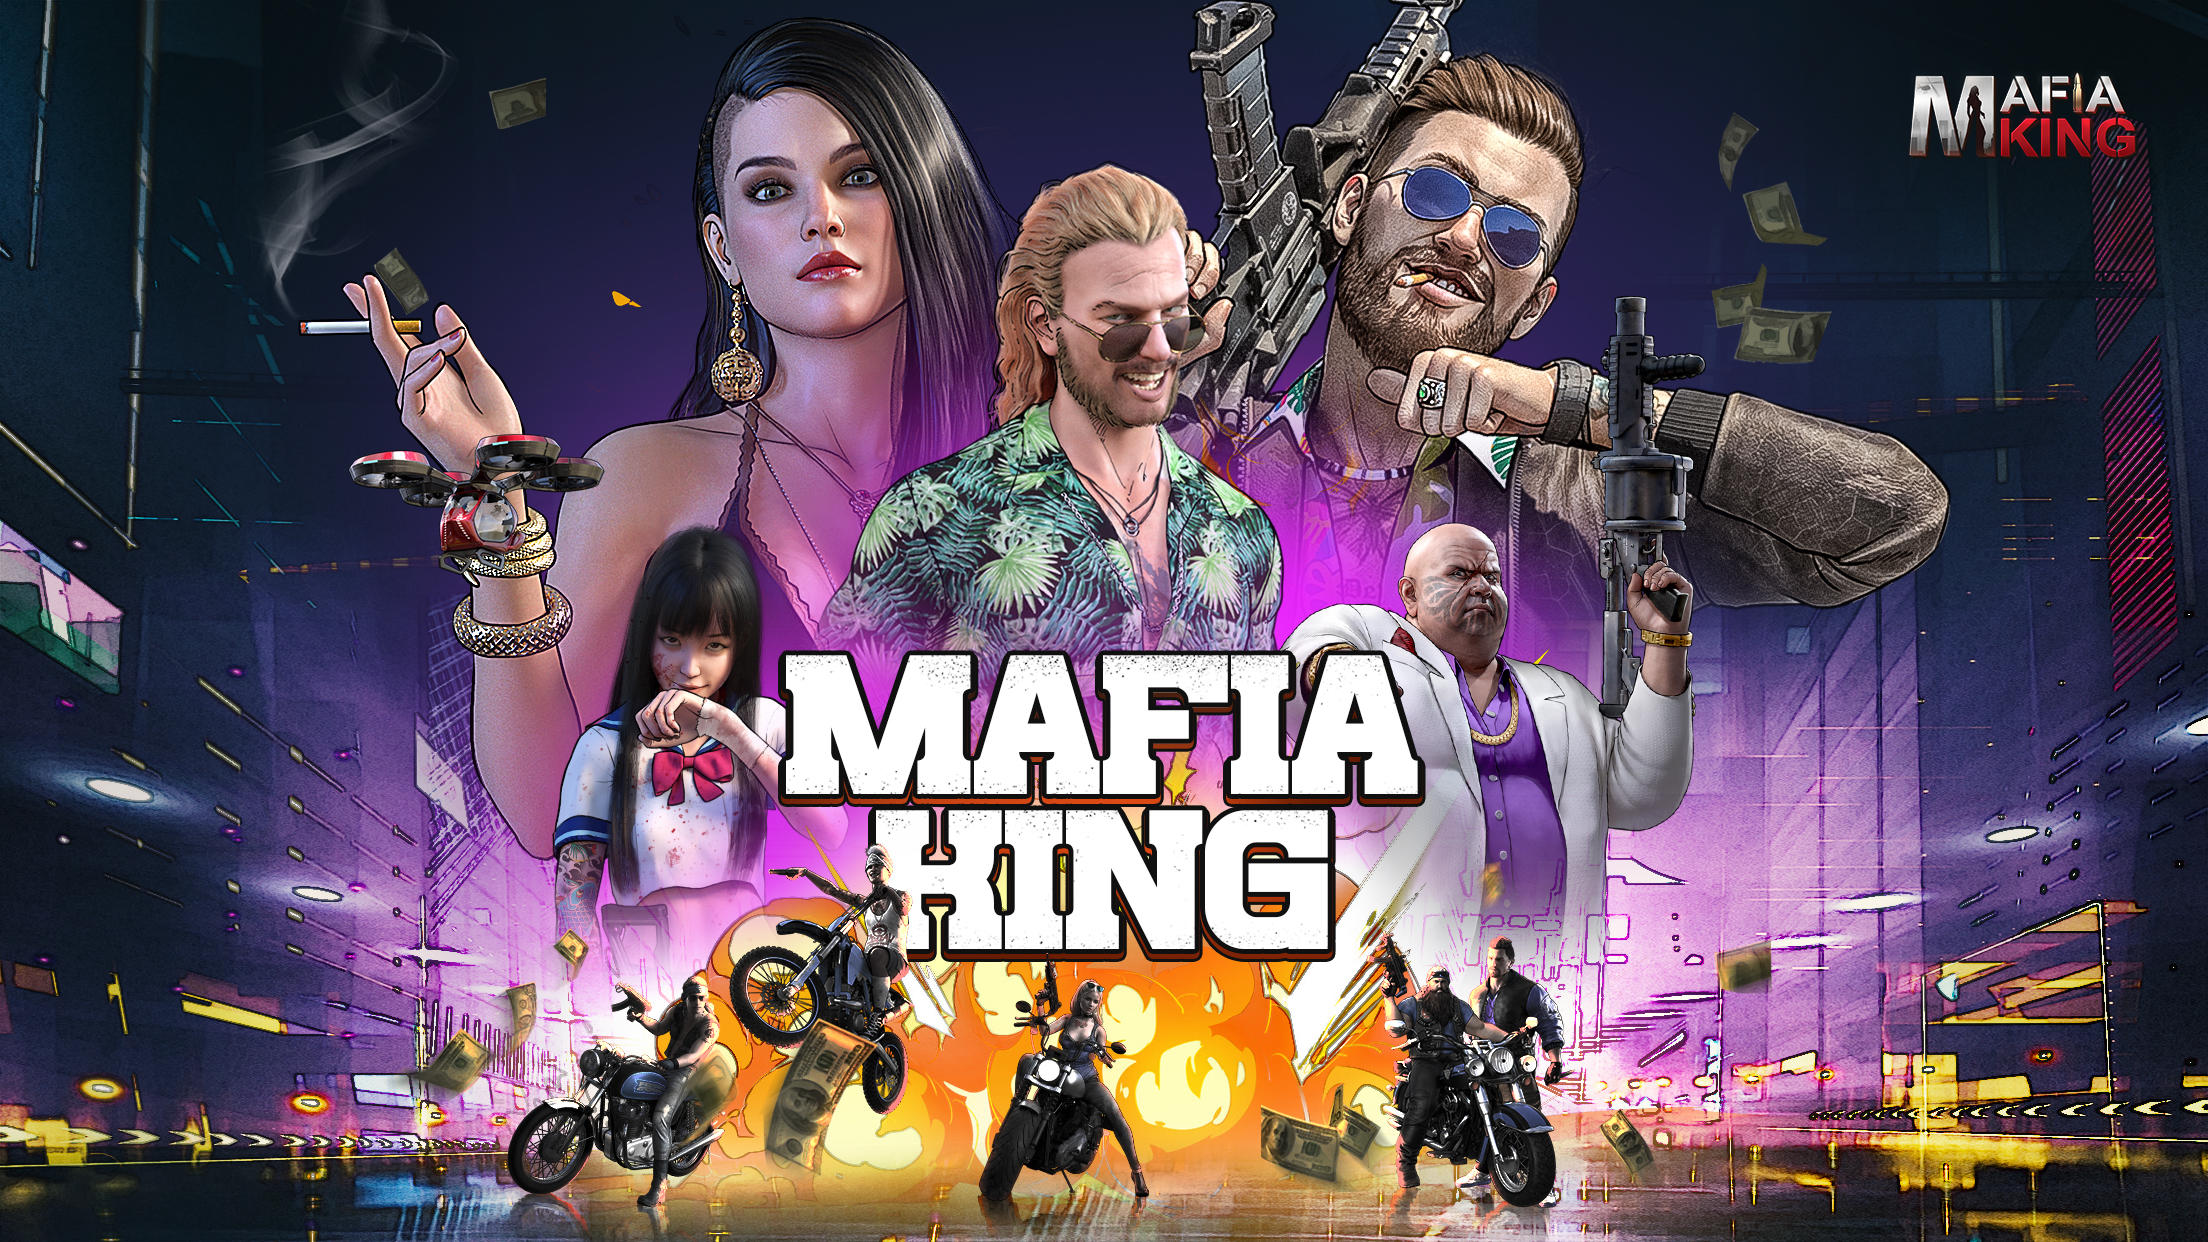 Screenshot 1 of Mafia King 1.9.0